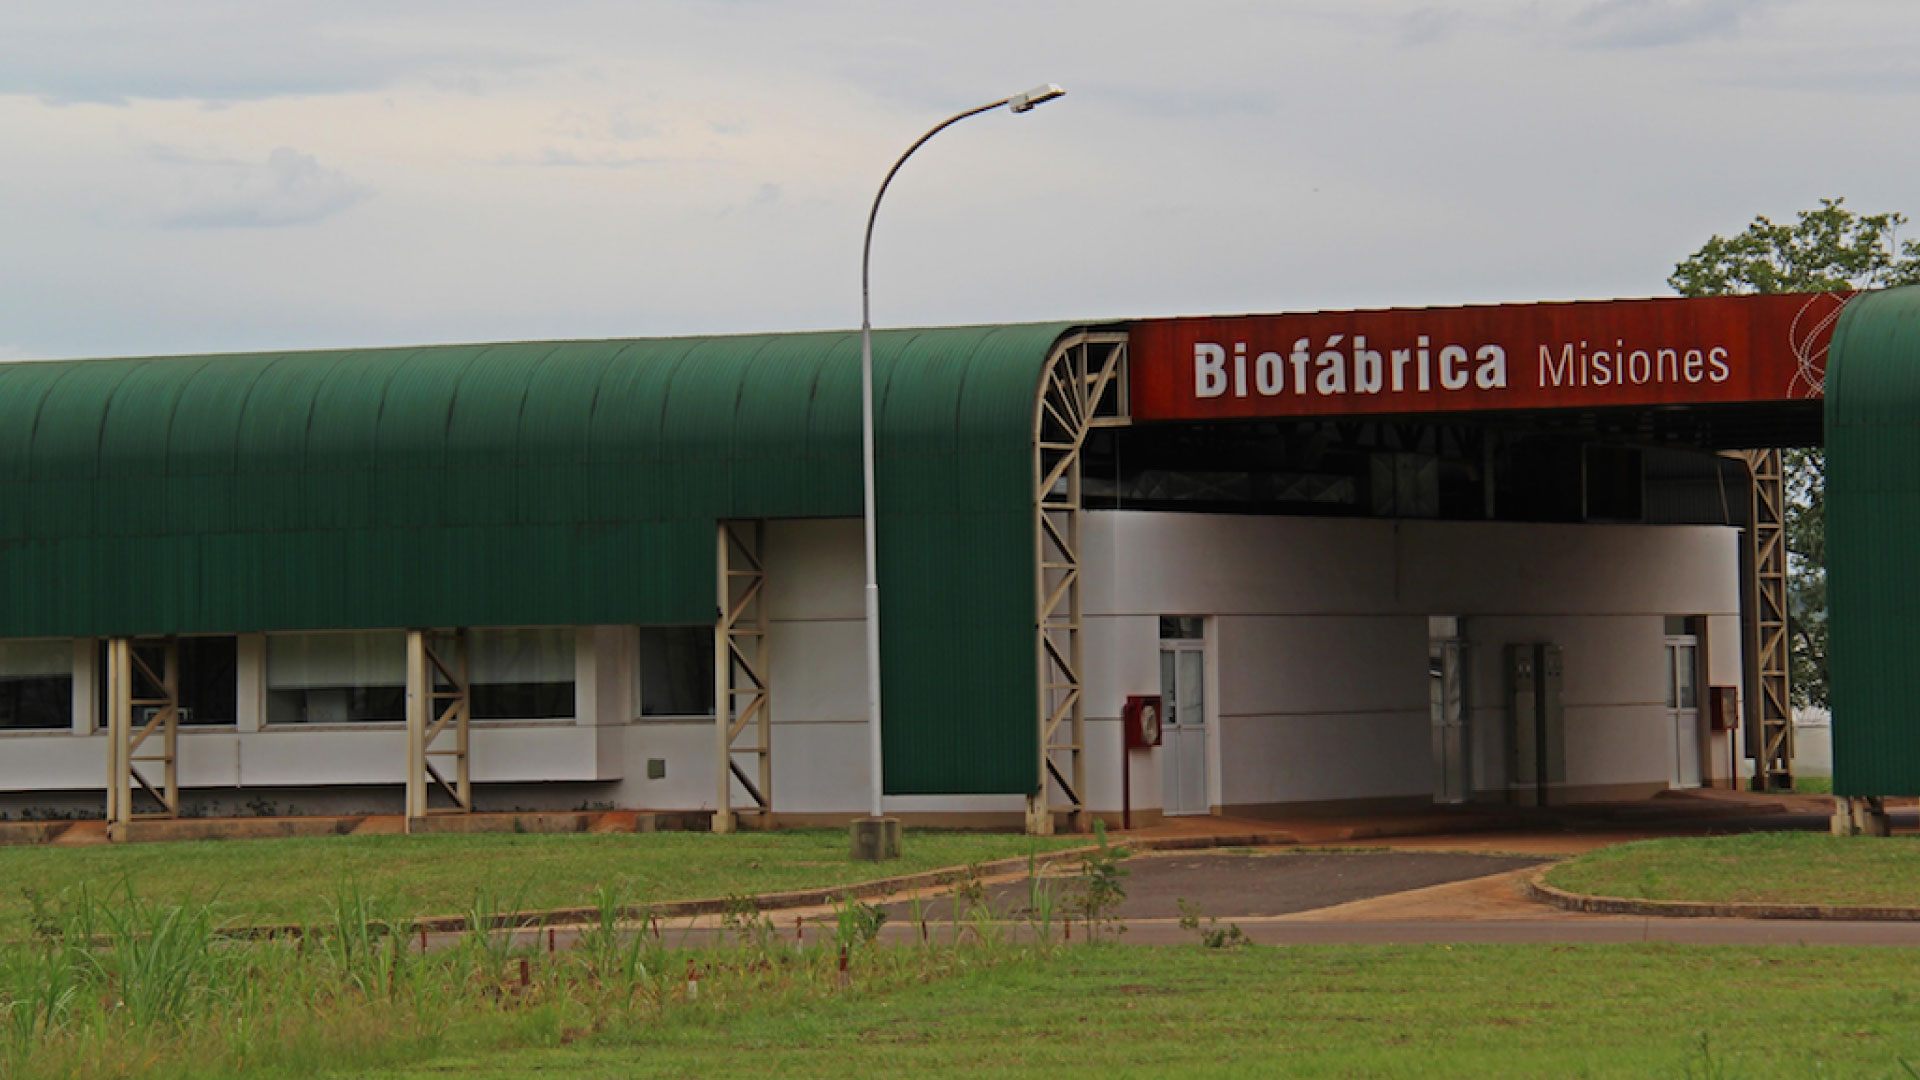 Biofabrica construida por Proobra S.A.